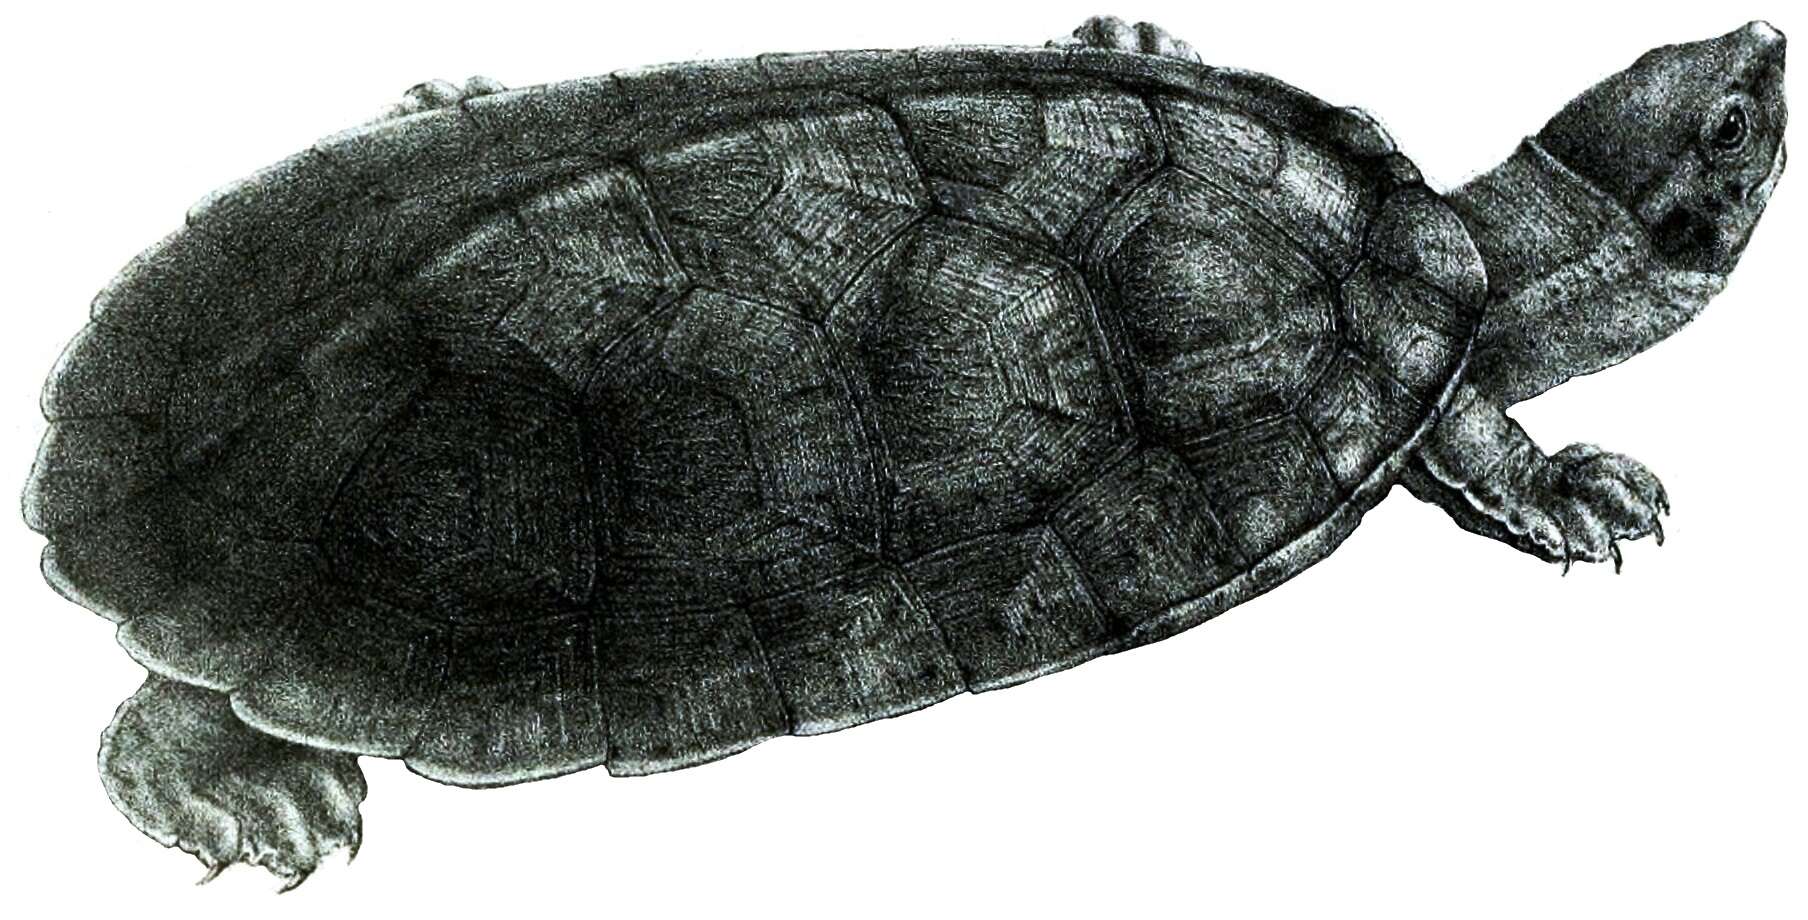 Image of river turtles